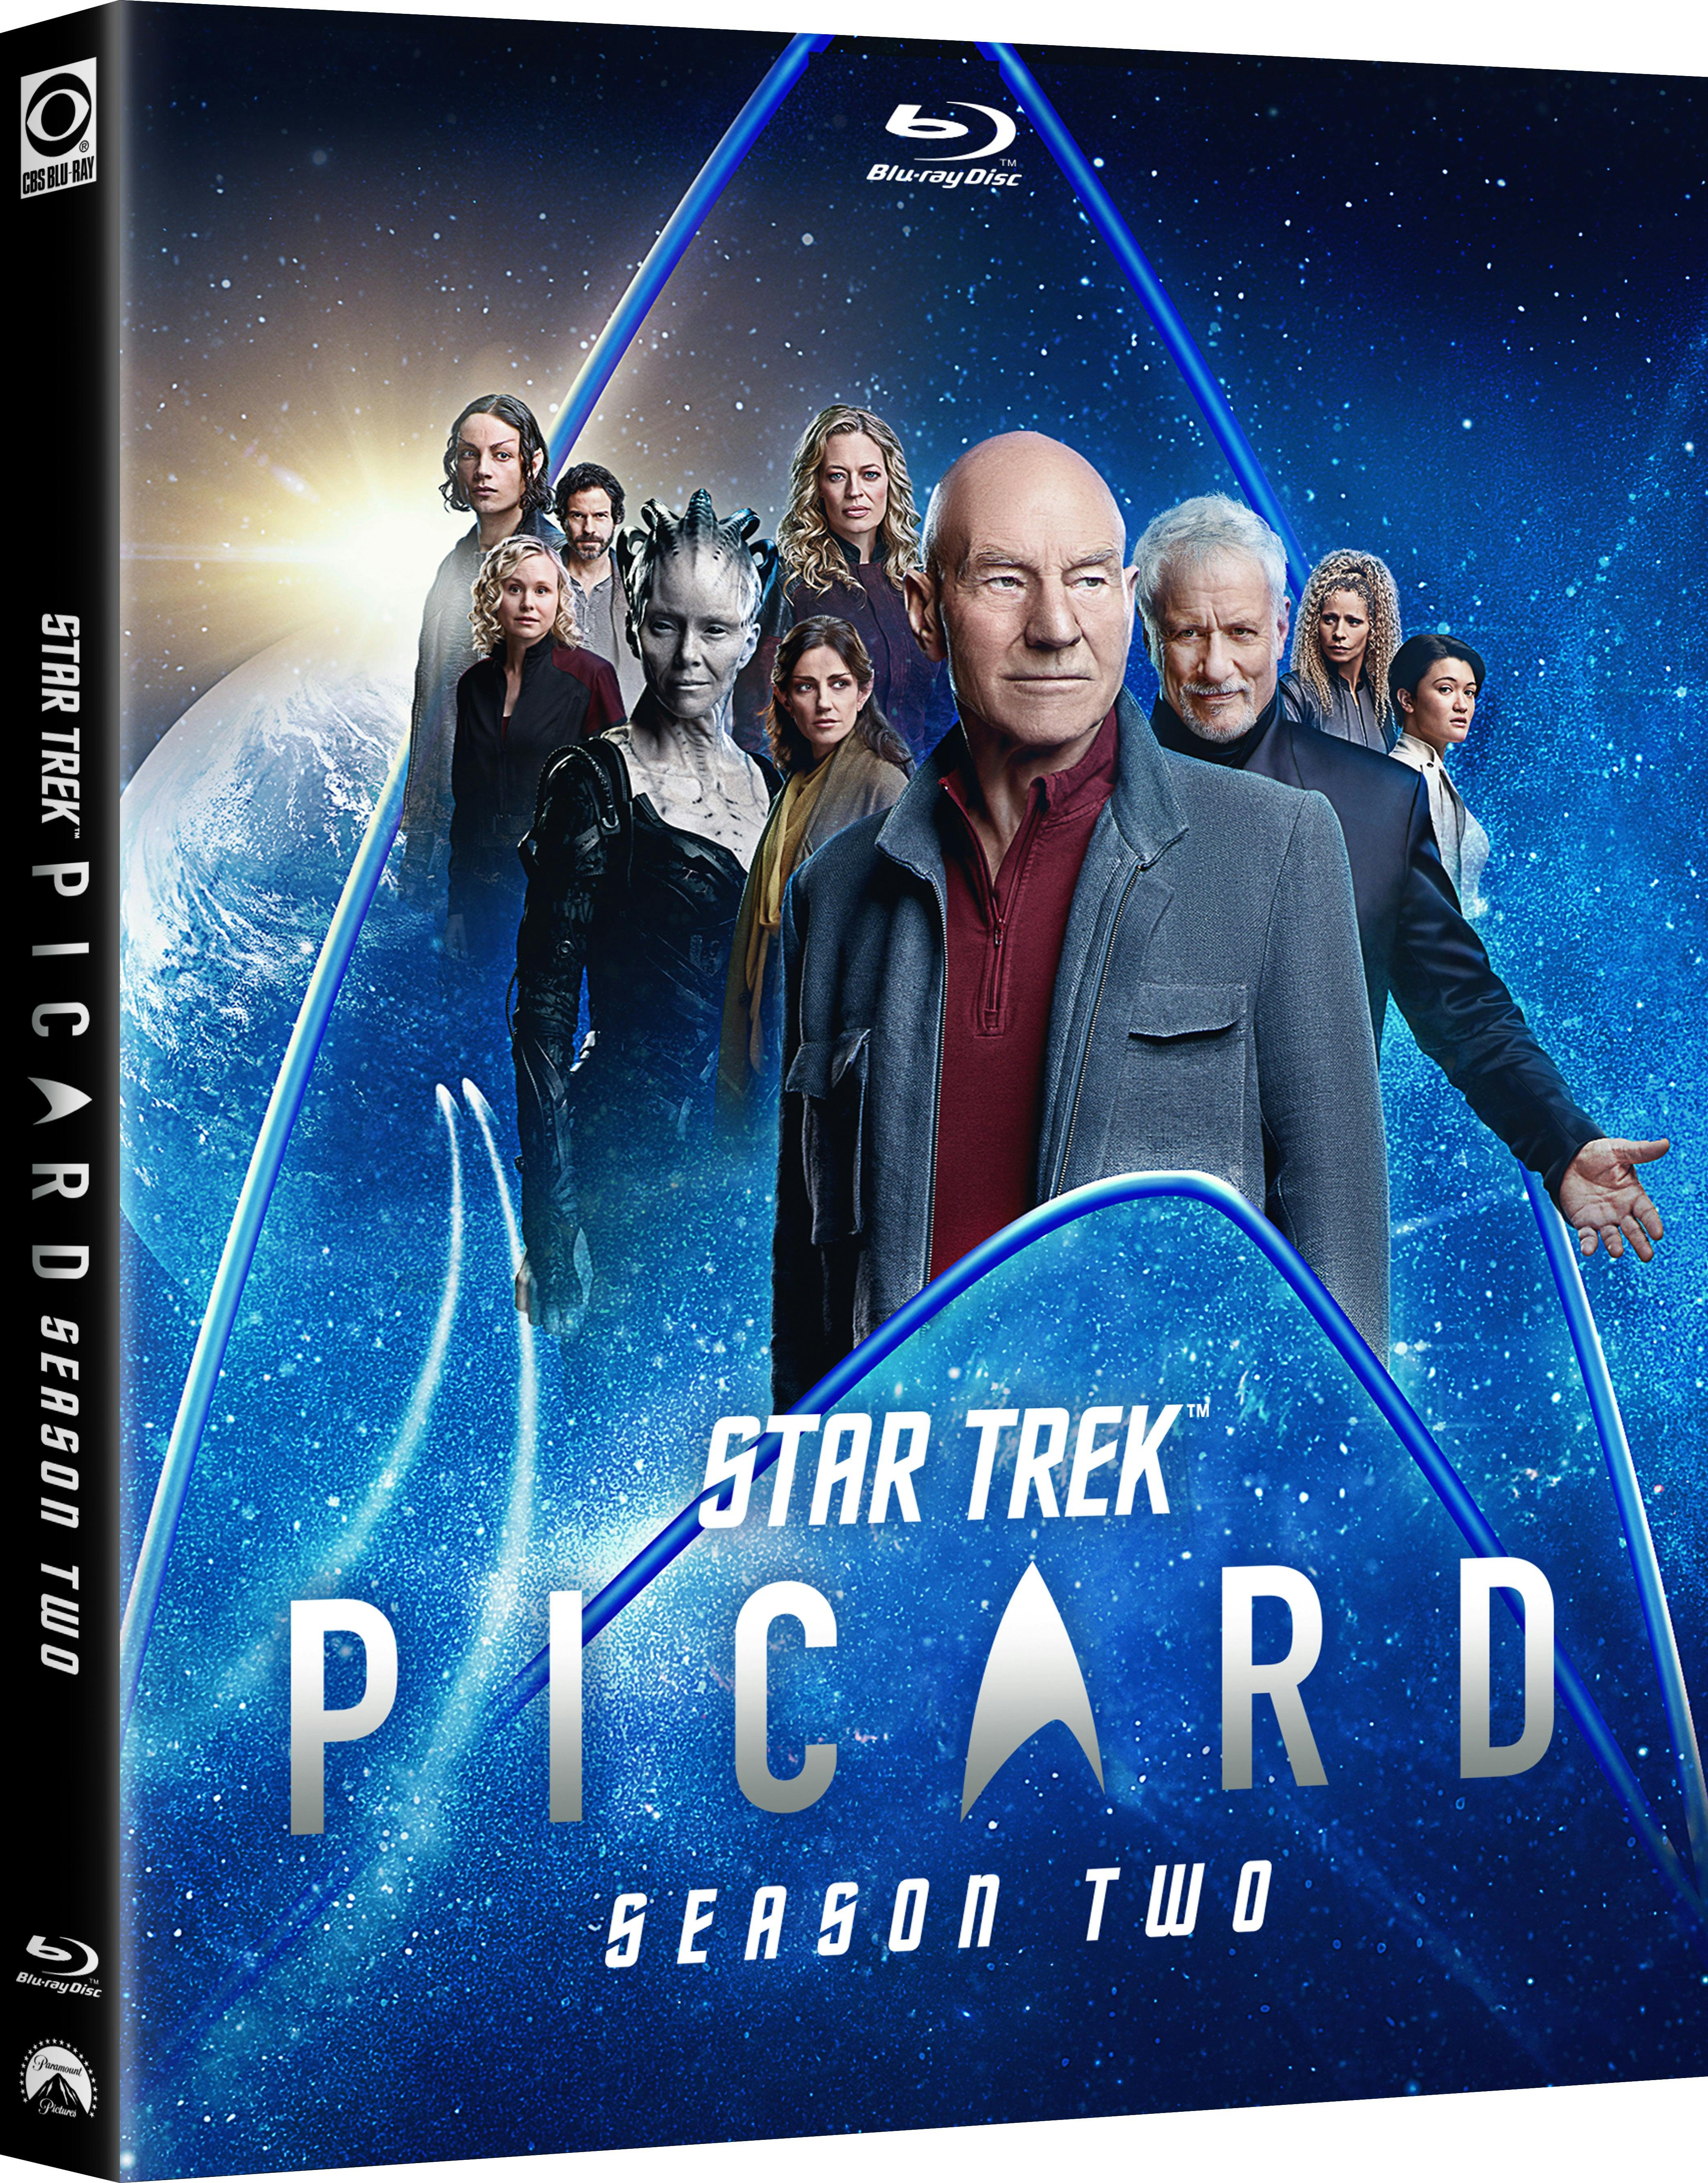 Star Trek: Picard - Season 2 Blu-ray box art